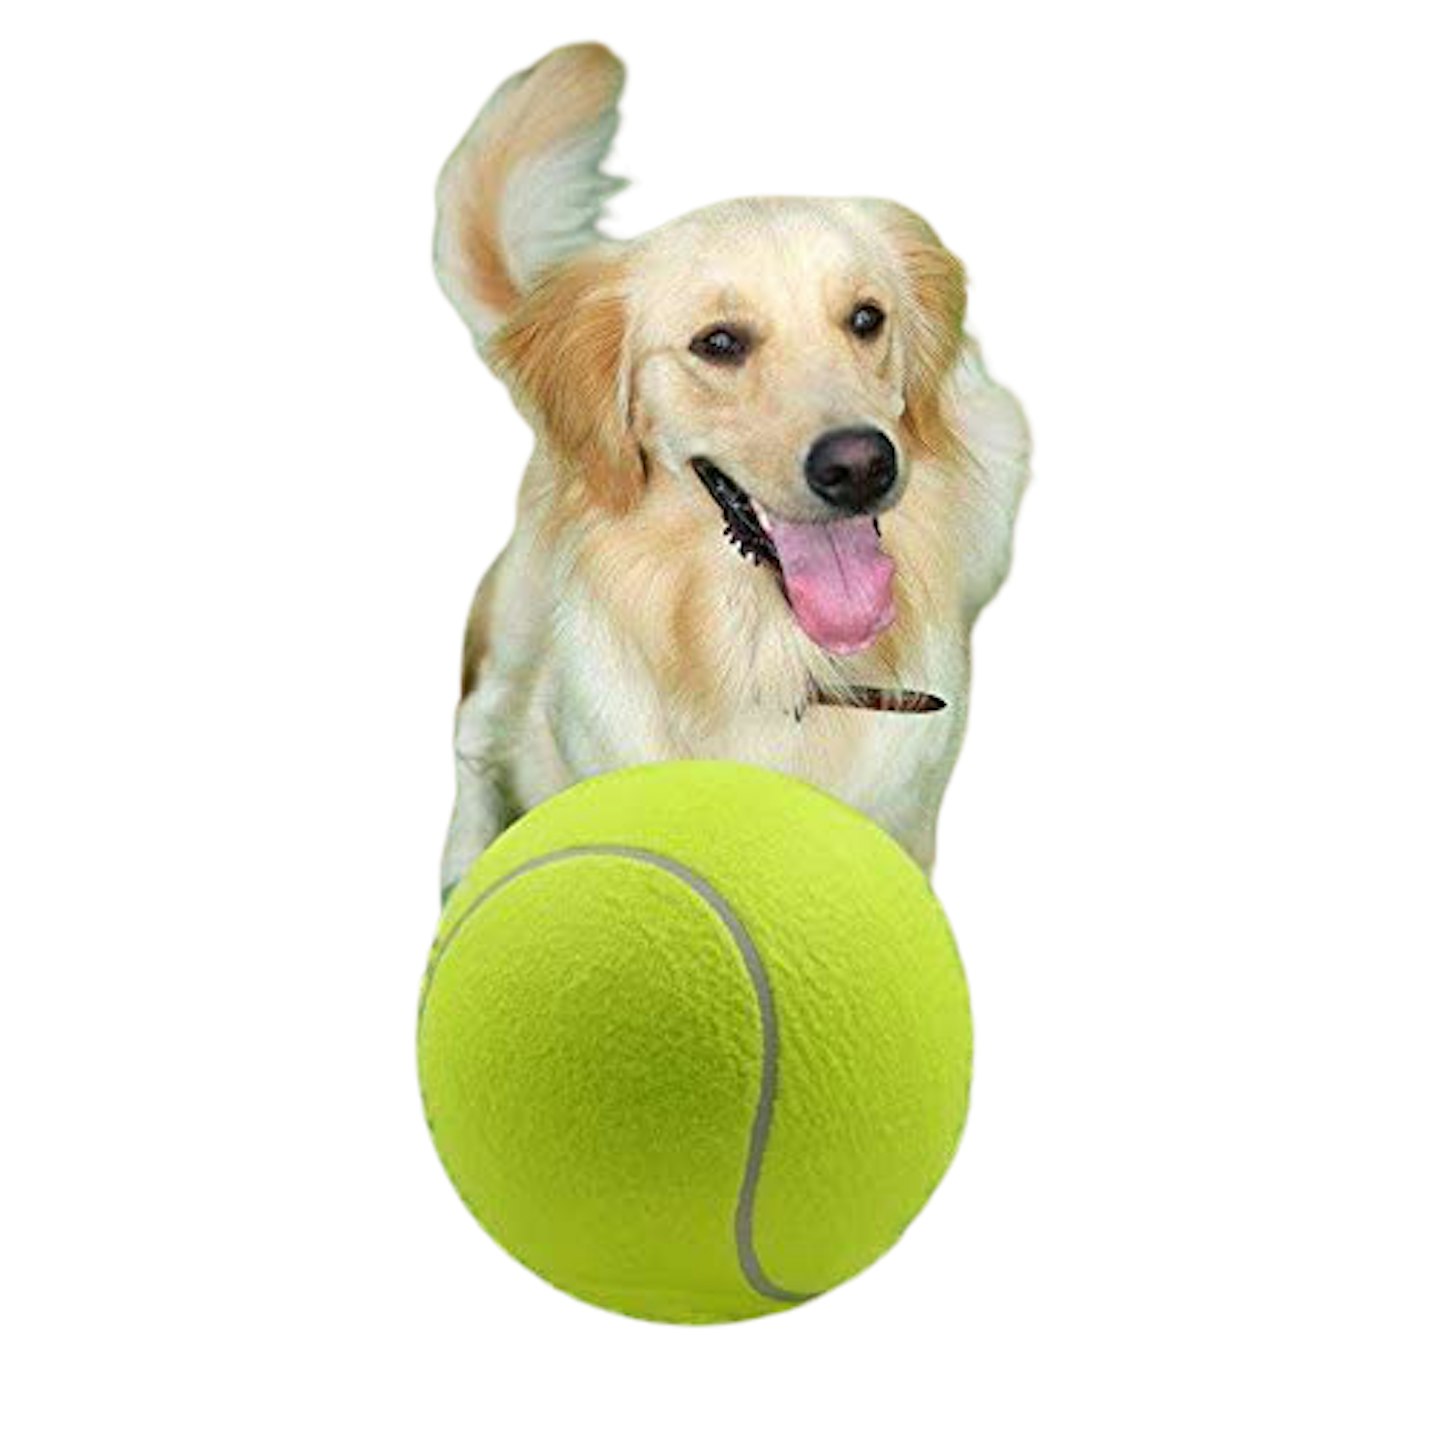 Labrador and giant tennis ball